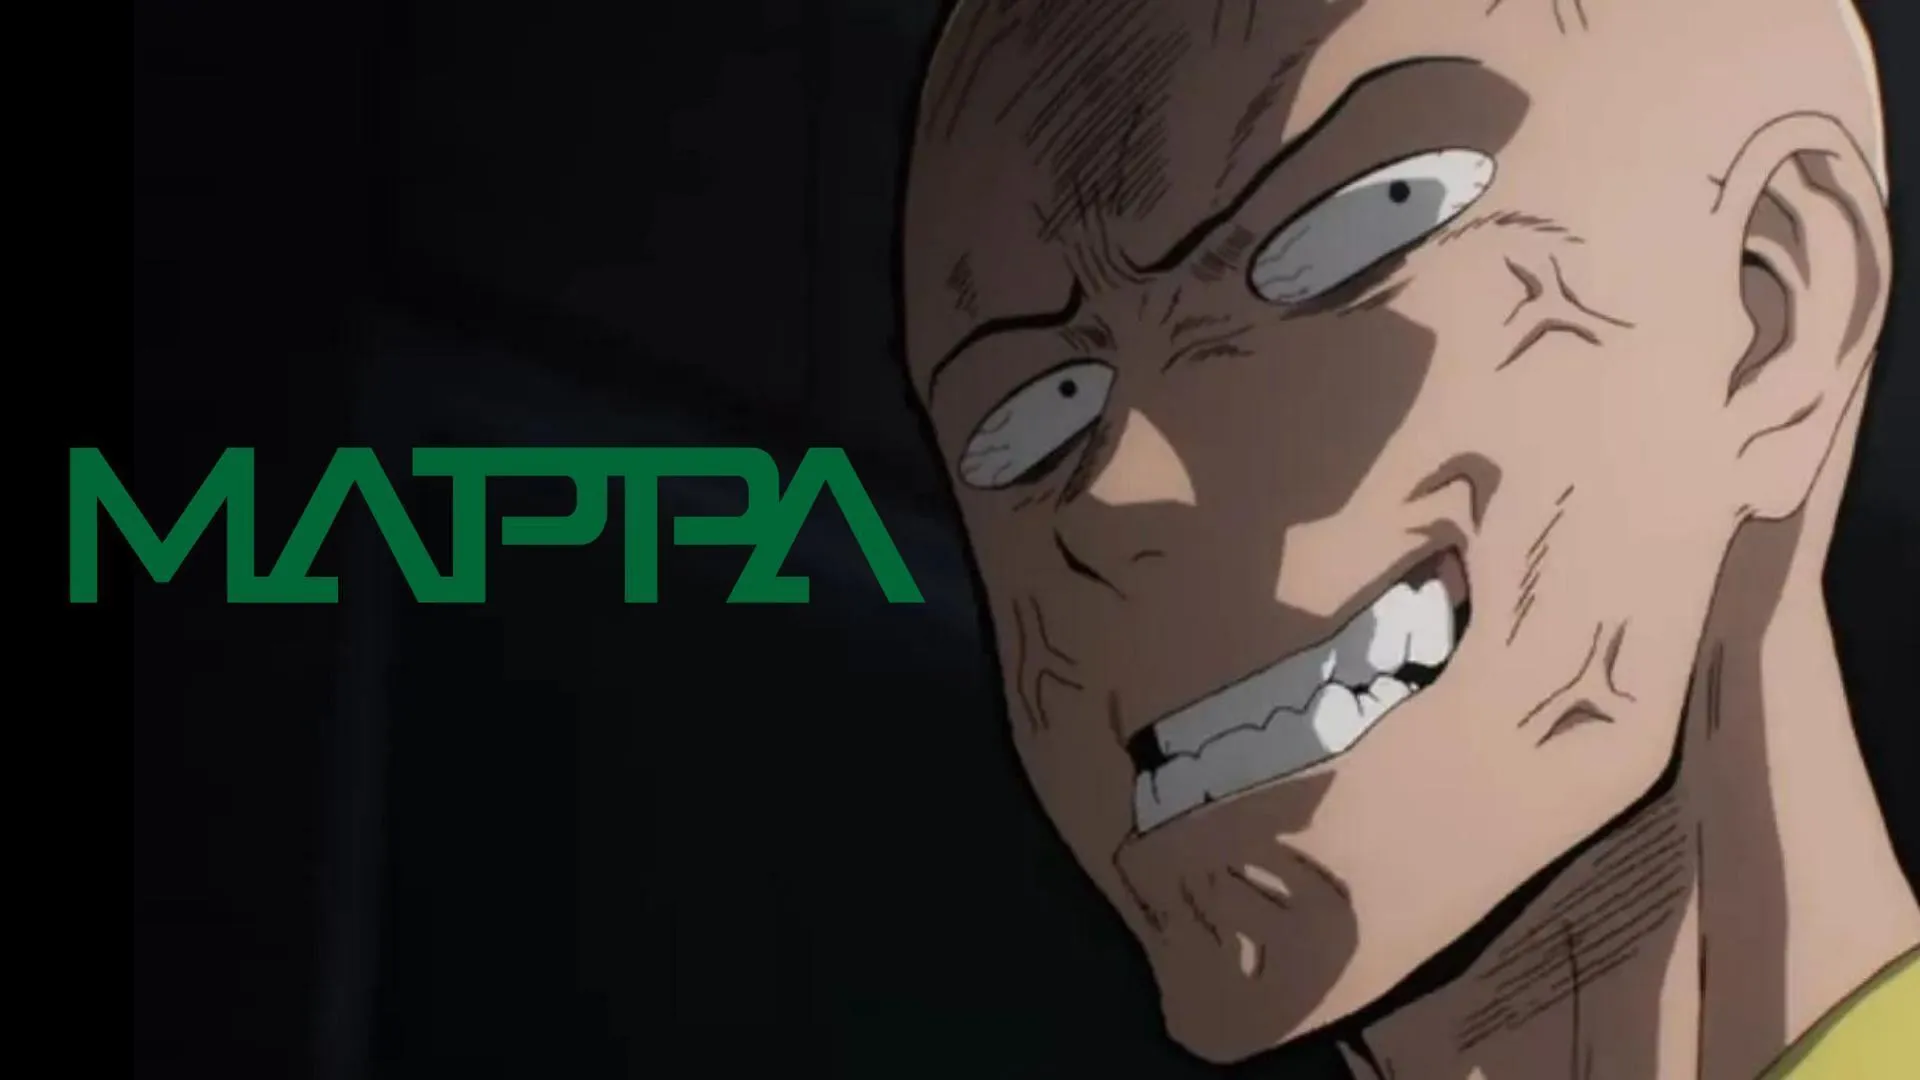 One-Punch Man aborda rumor da 3ª temporada no estúdio MAPPA